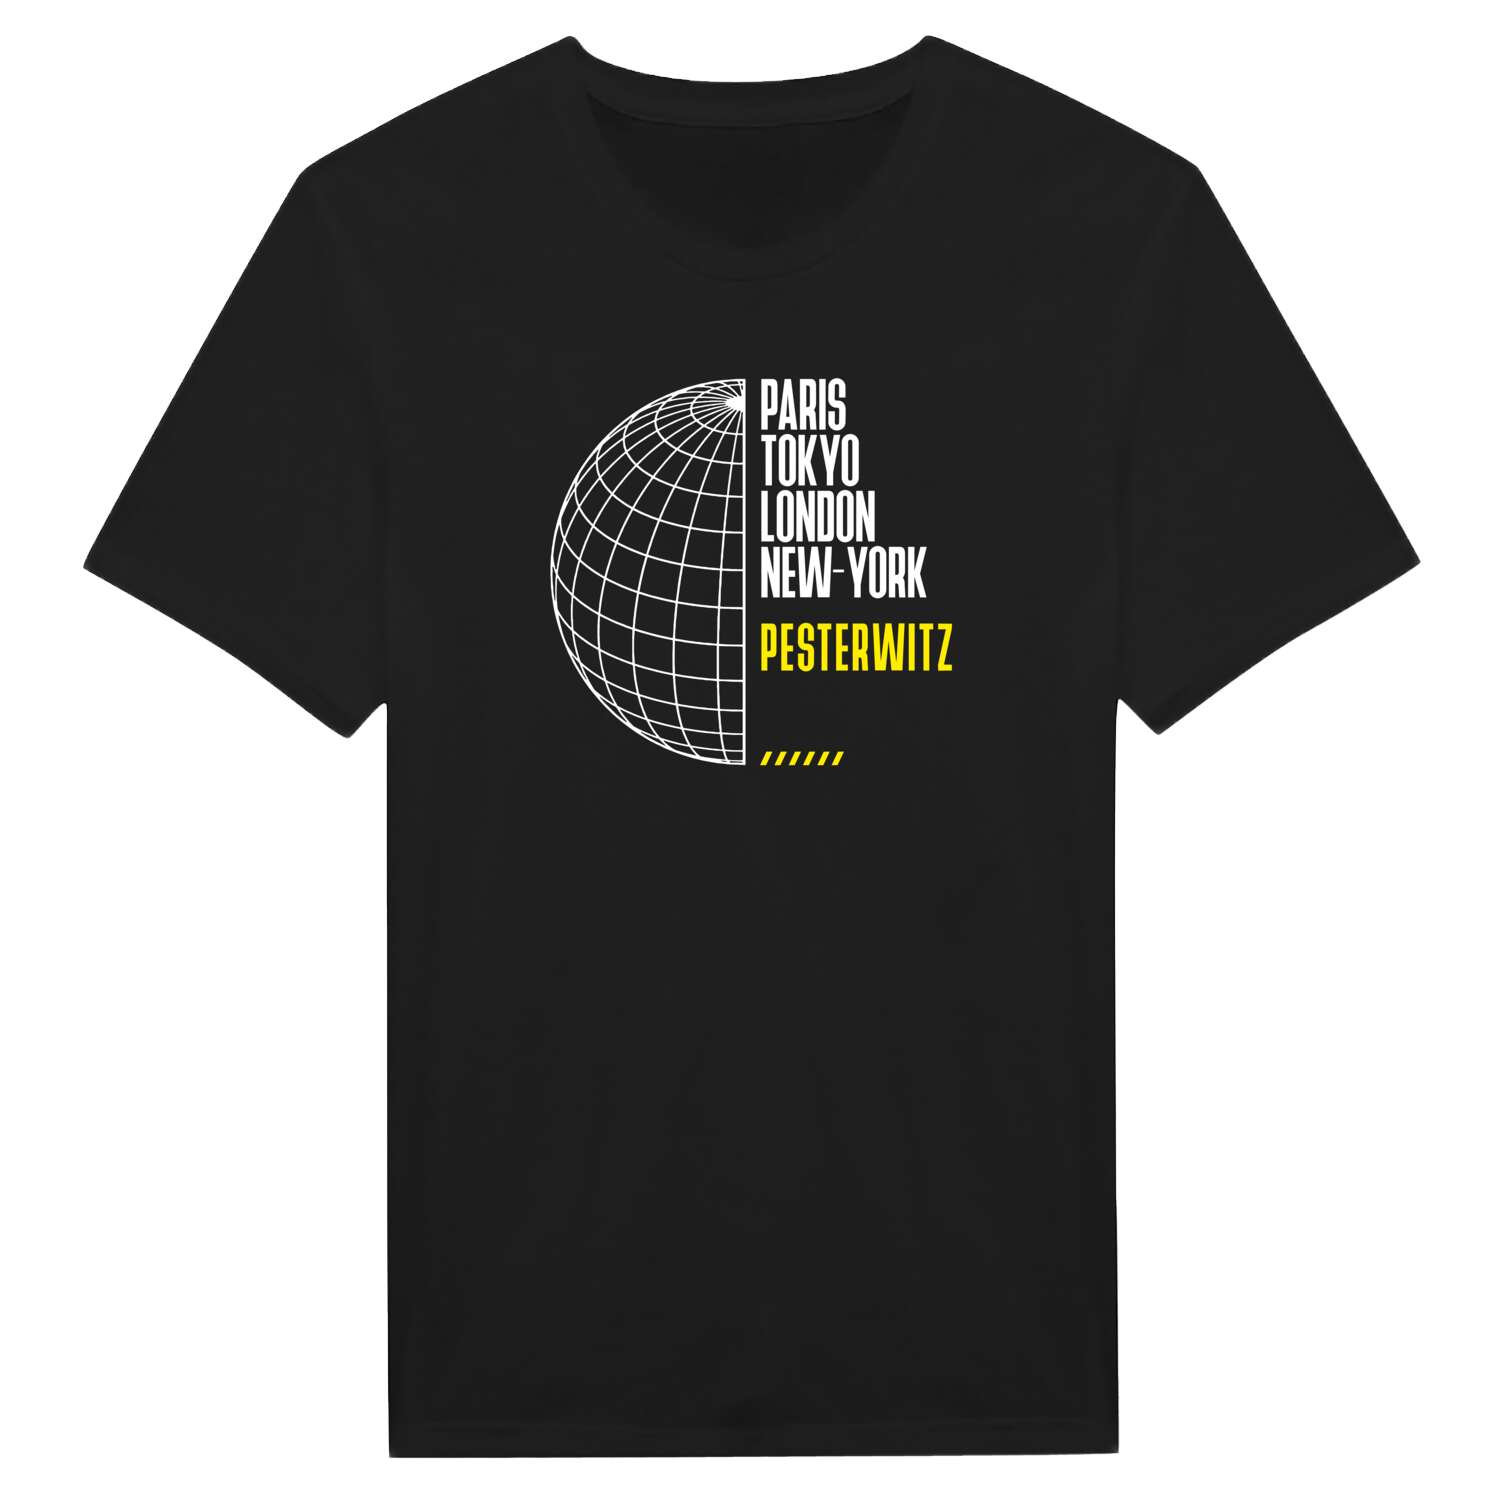 Pesterwitz T-Shirt »Paris Tokyo London«